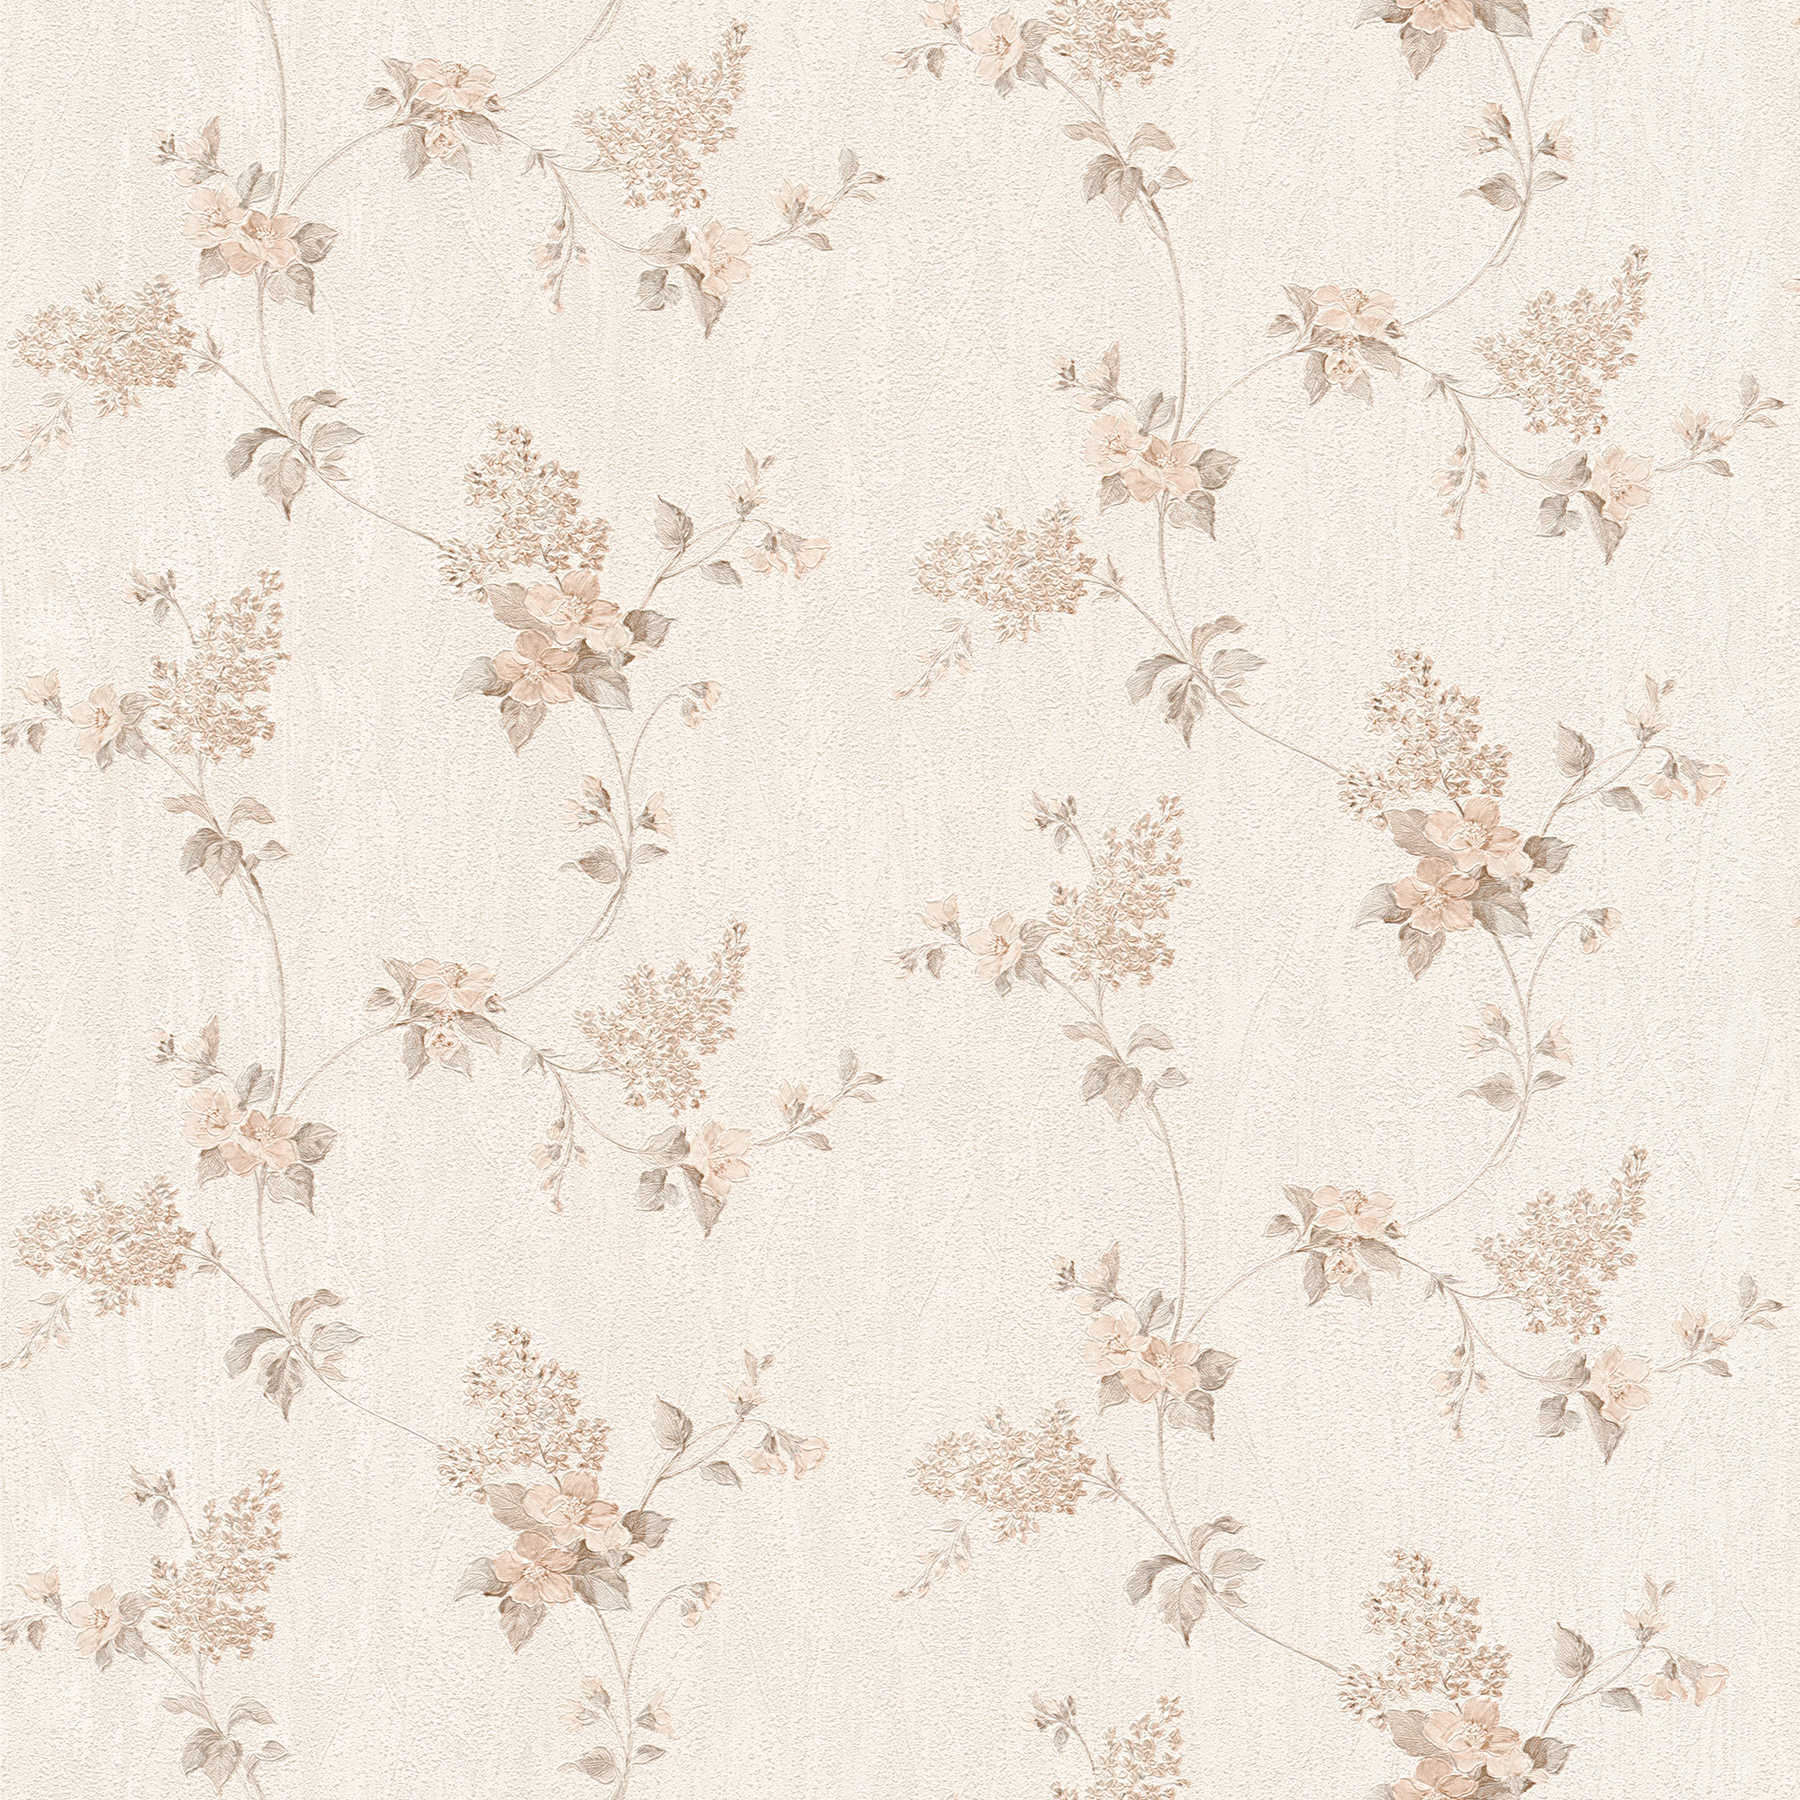 Vintage wallpaper floral vines & plaster look - cream
